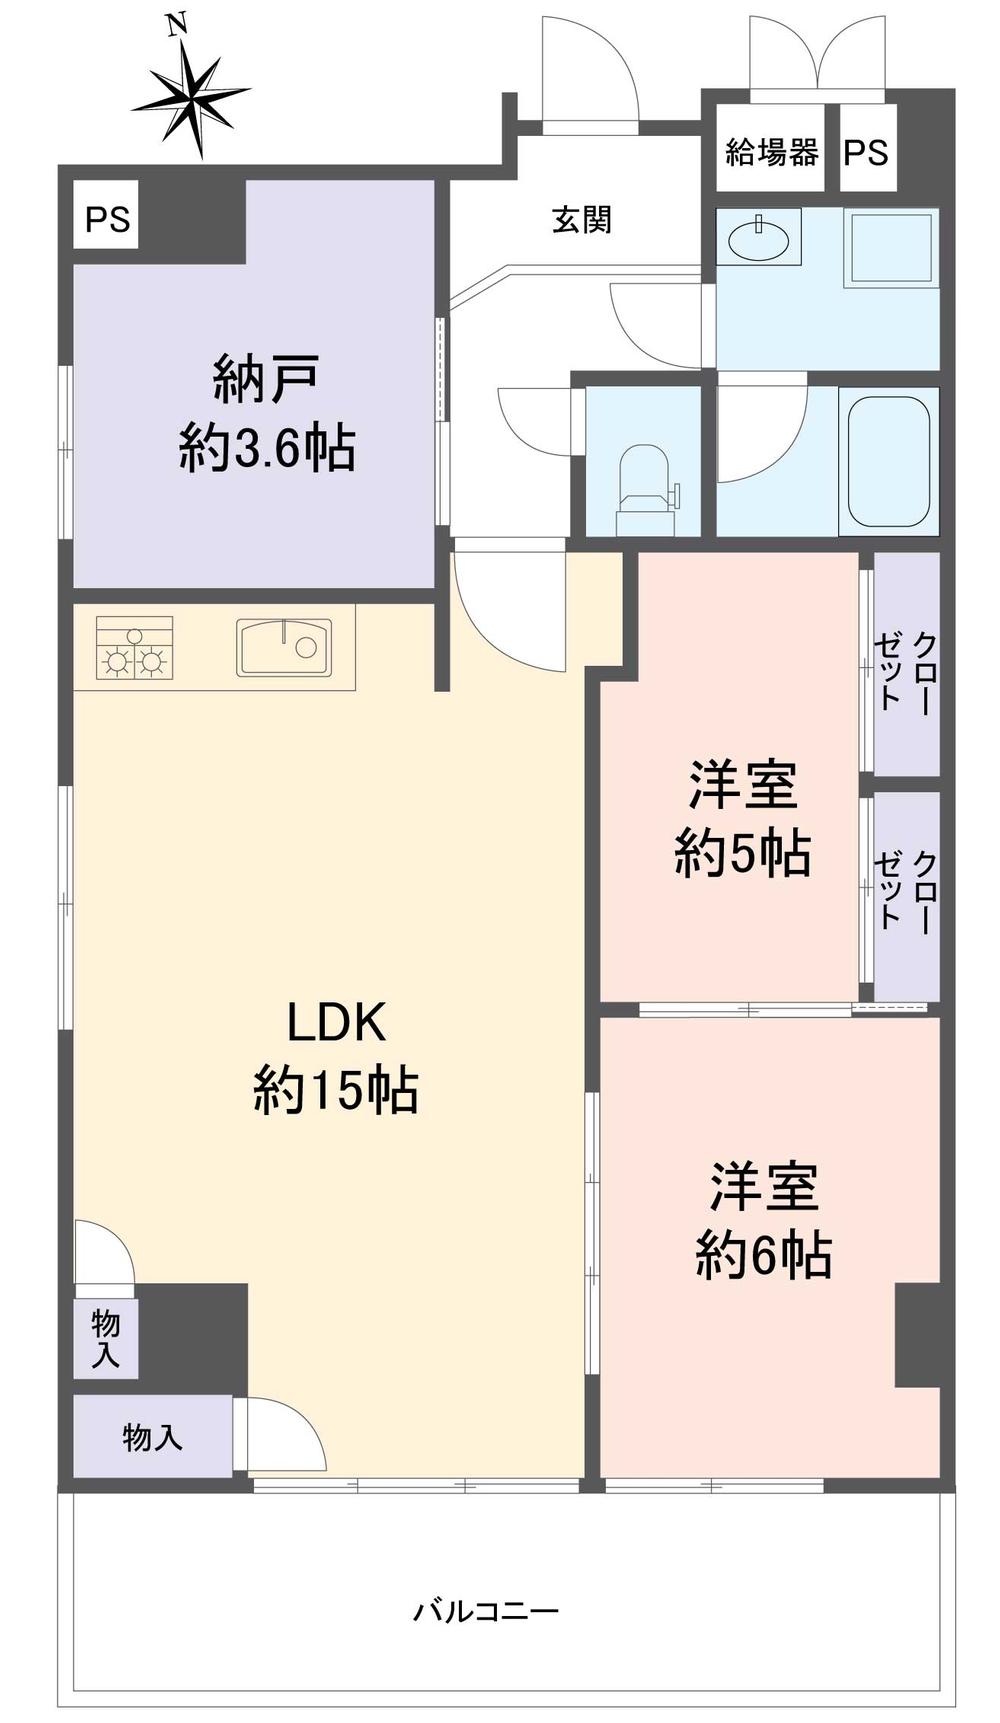 Floor plan. 3LDK, Price 15.9 million yen, Footprint 57.6 sq m , Balcony area 8 sq m